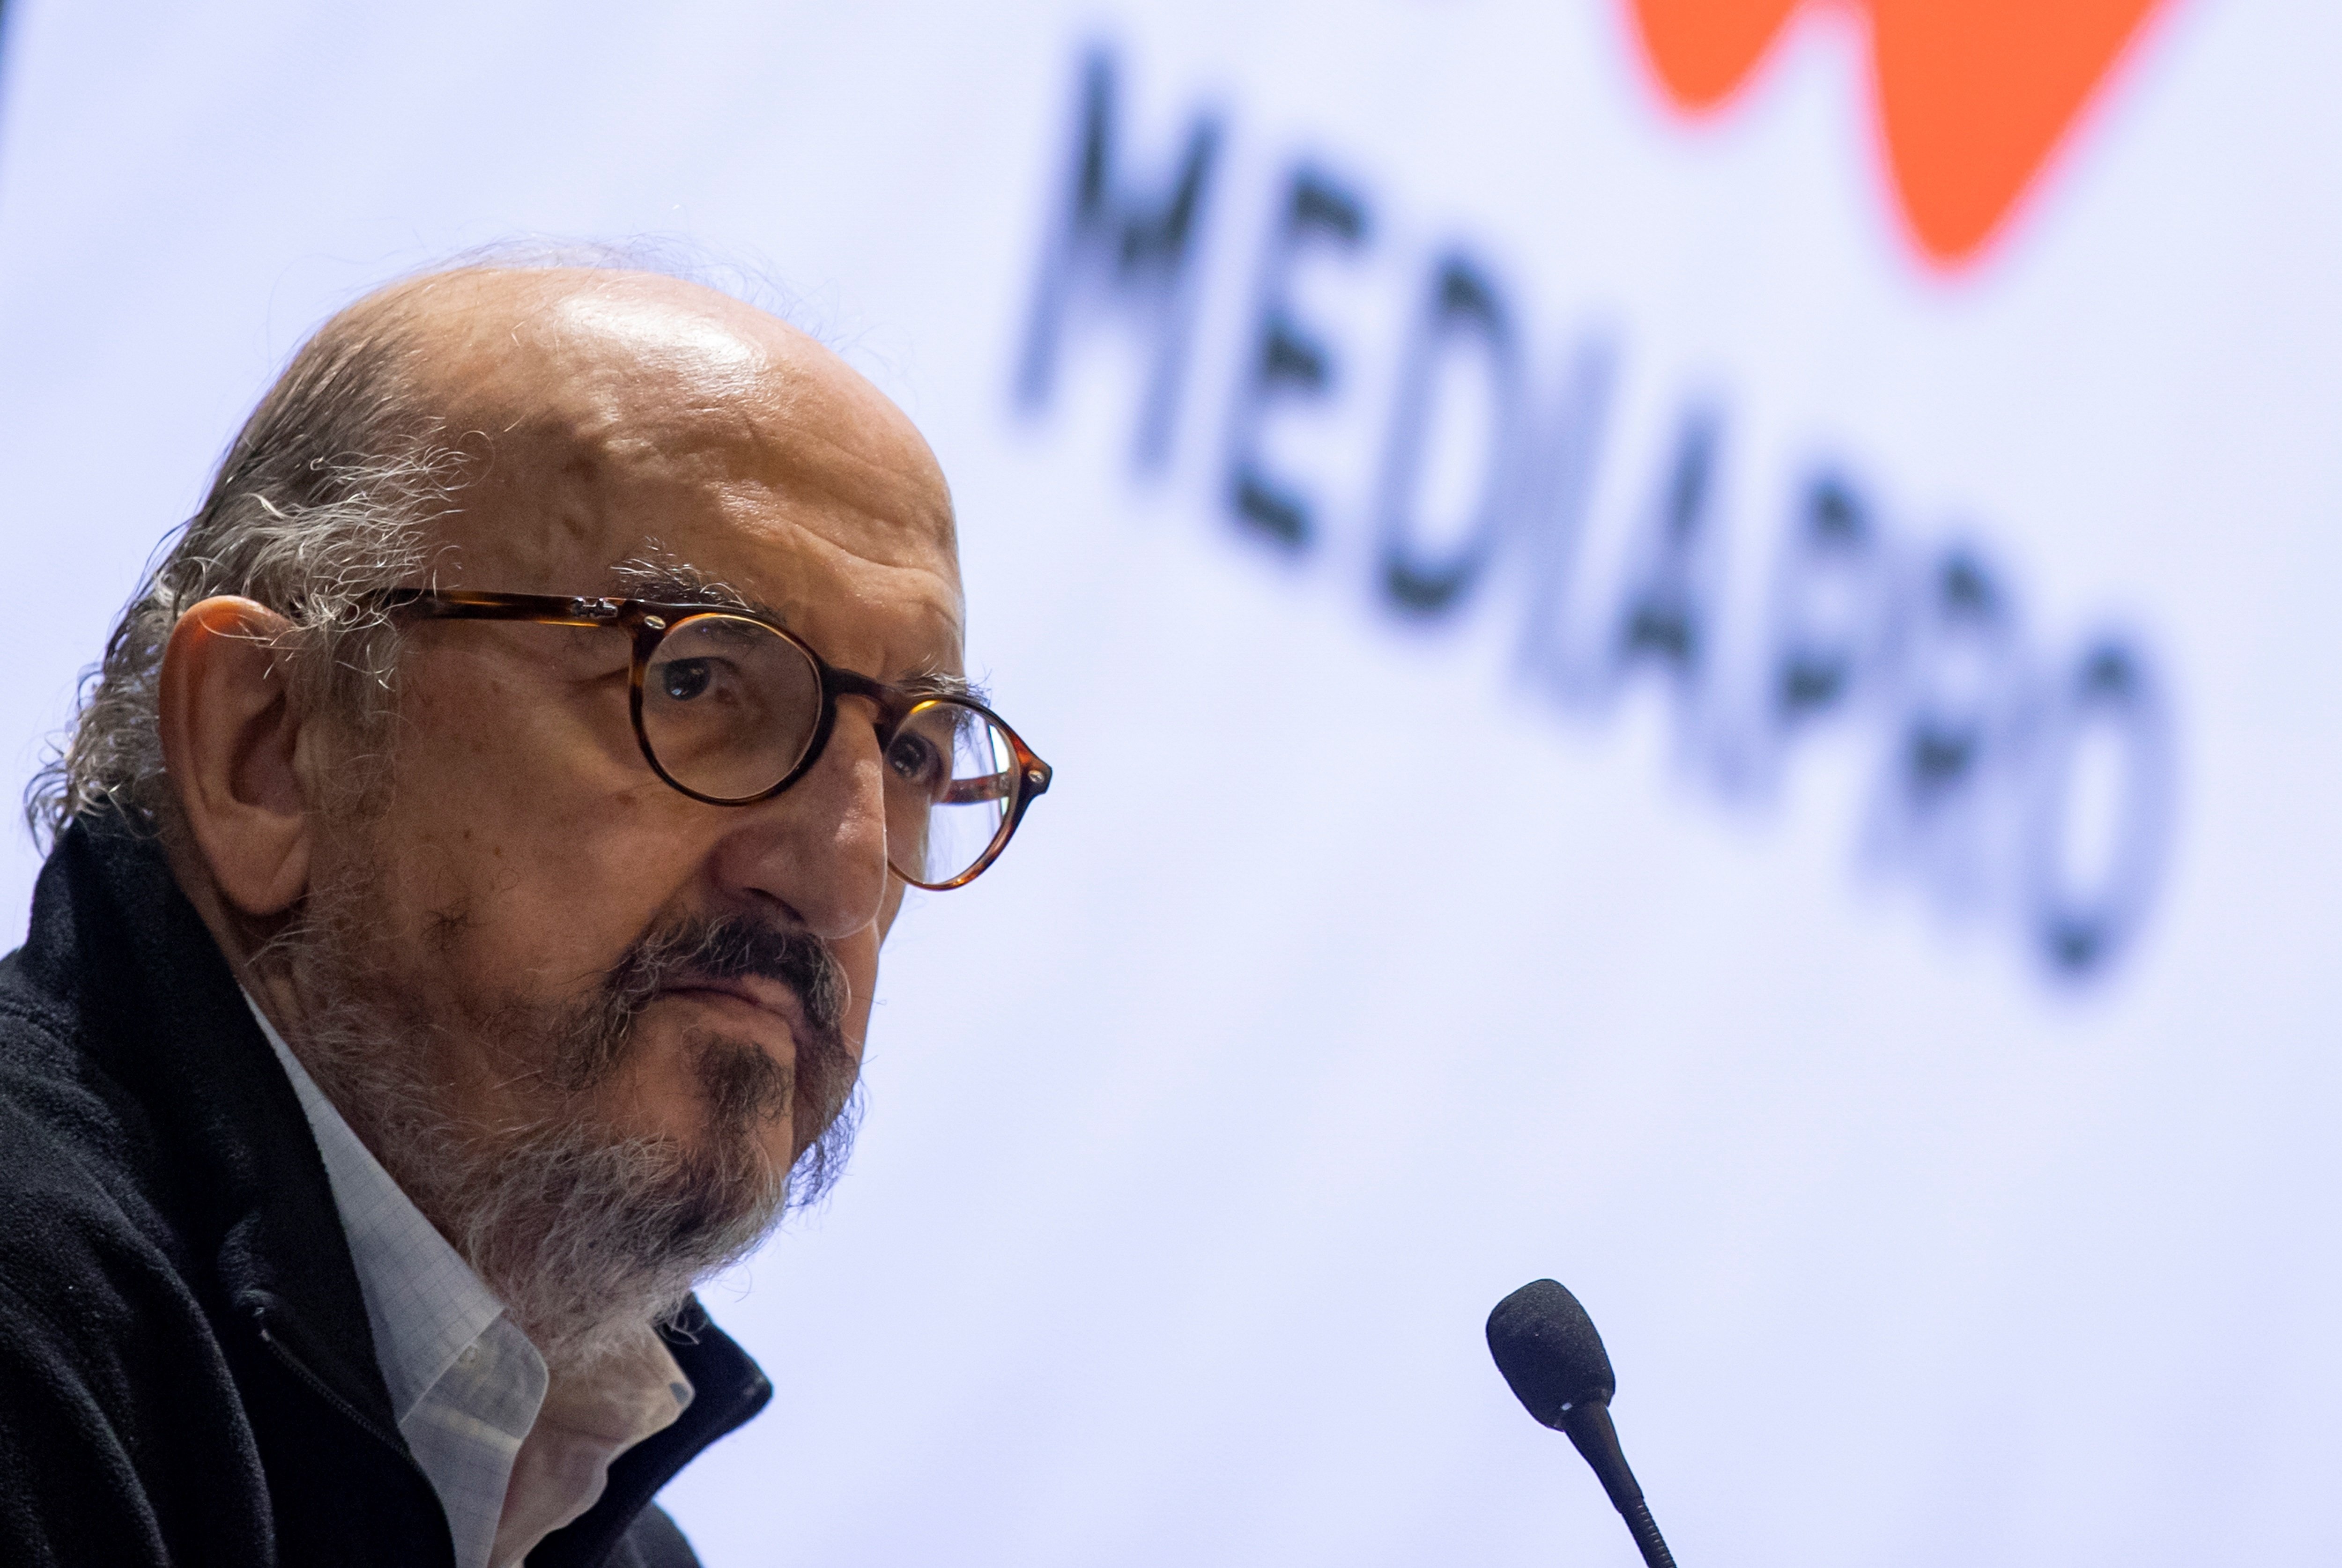 Jaume Roures, CEO Mediapro, Paris 21 October 2020 (EFE)